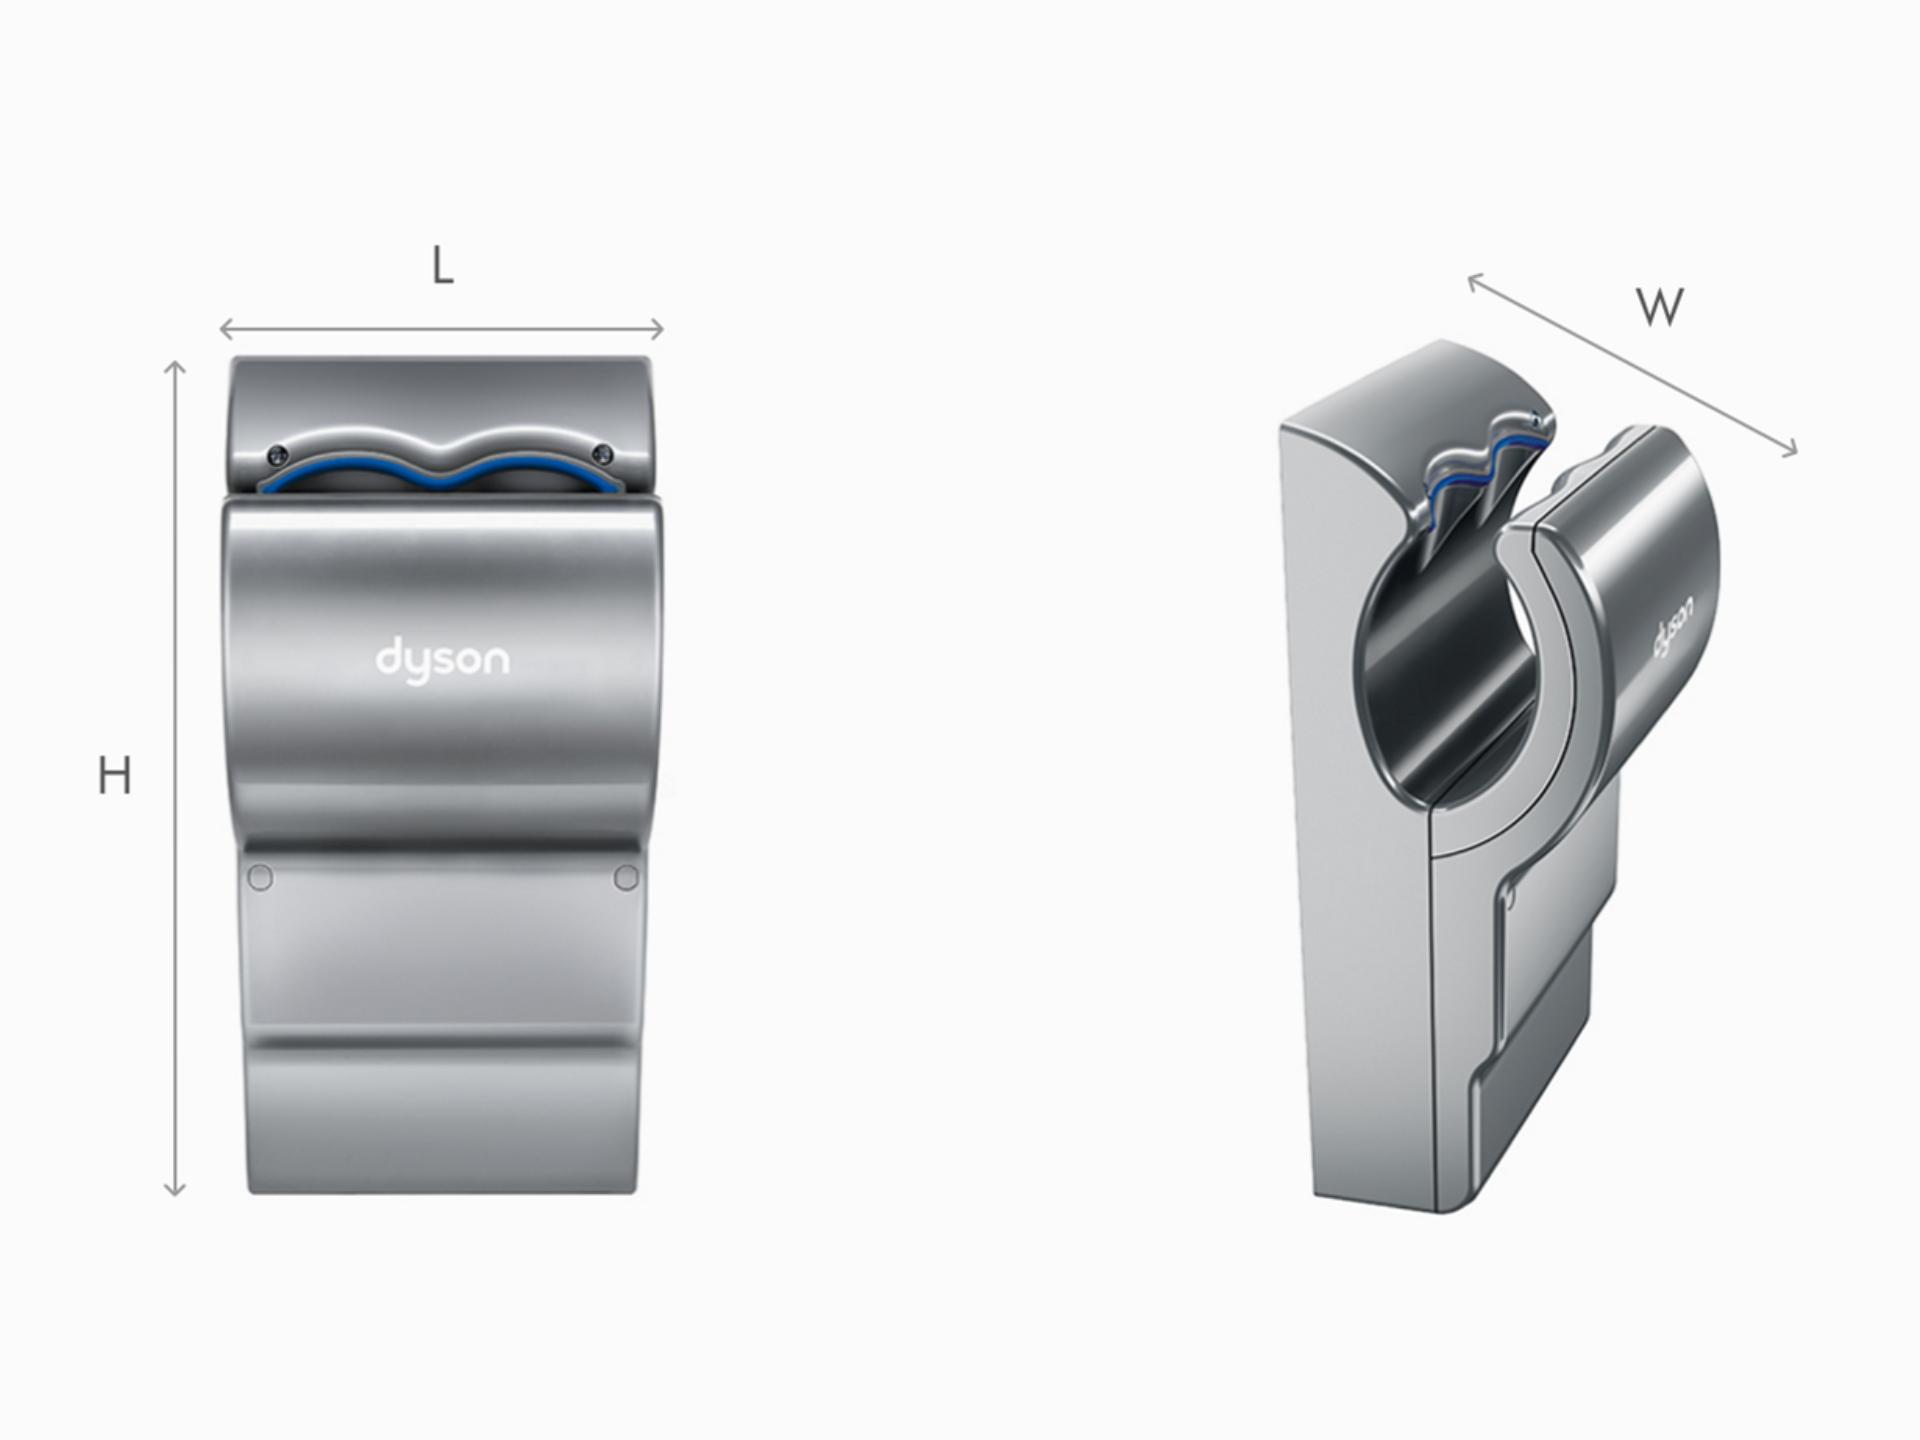 Illustration of Dyson Airblade dB grey hand dryer dimensions